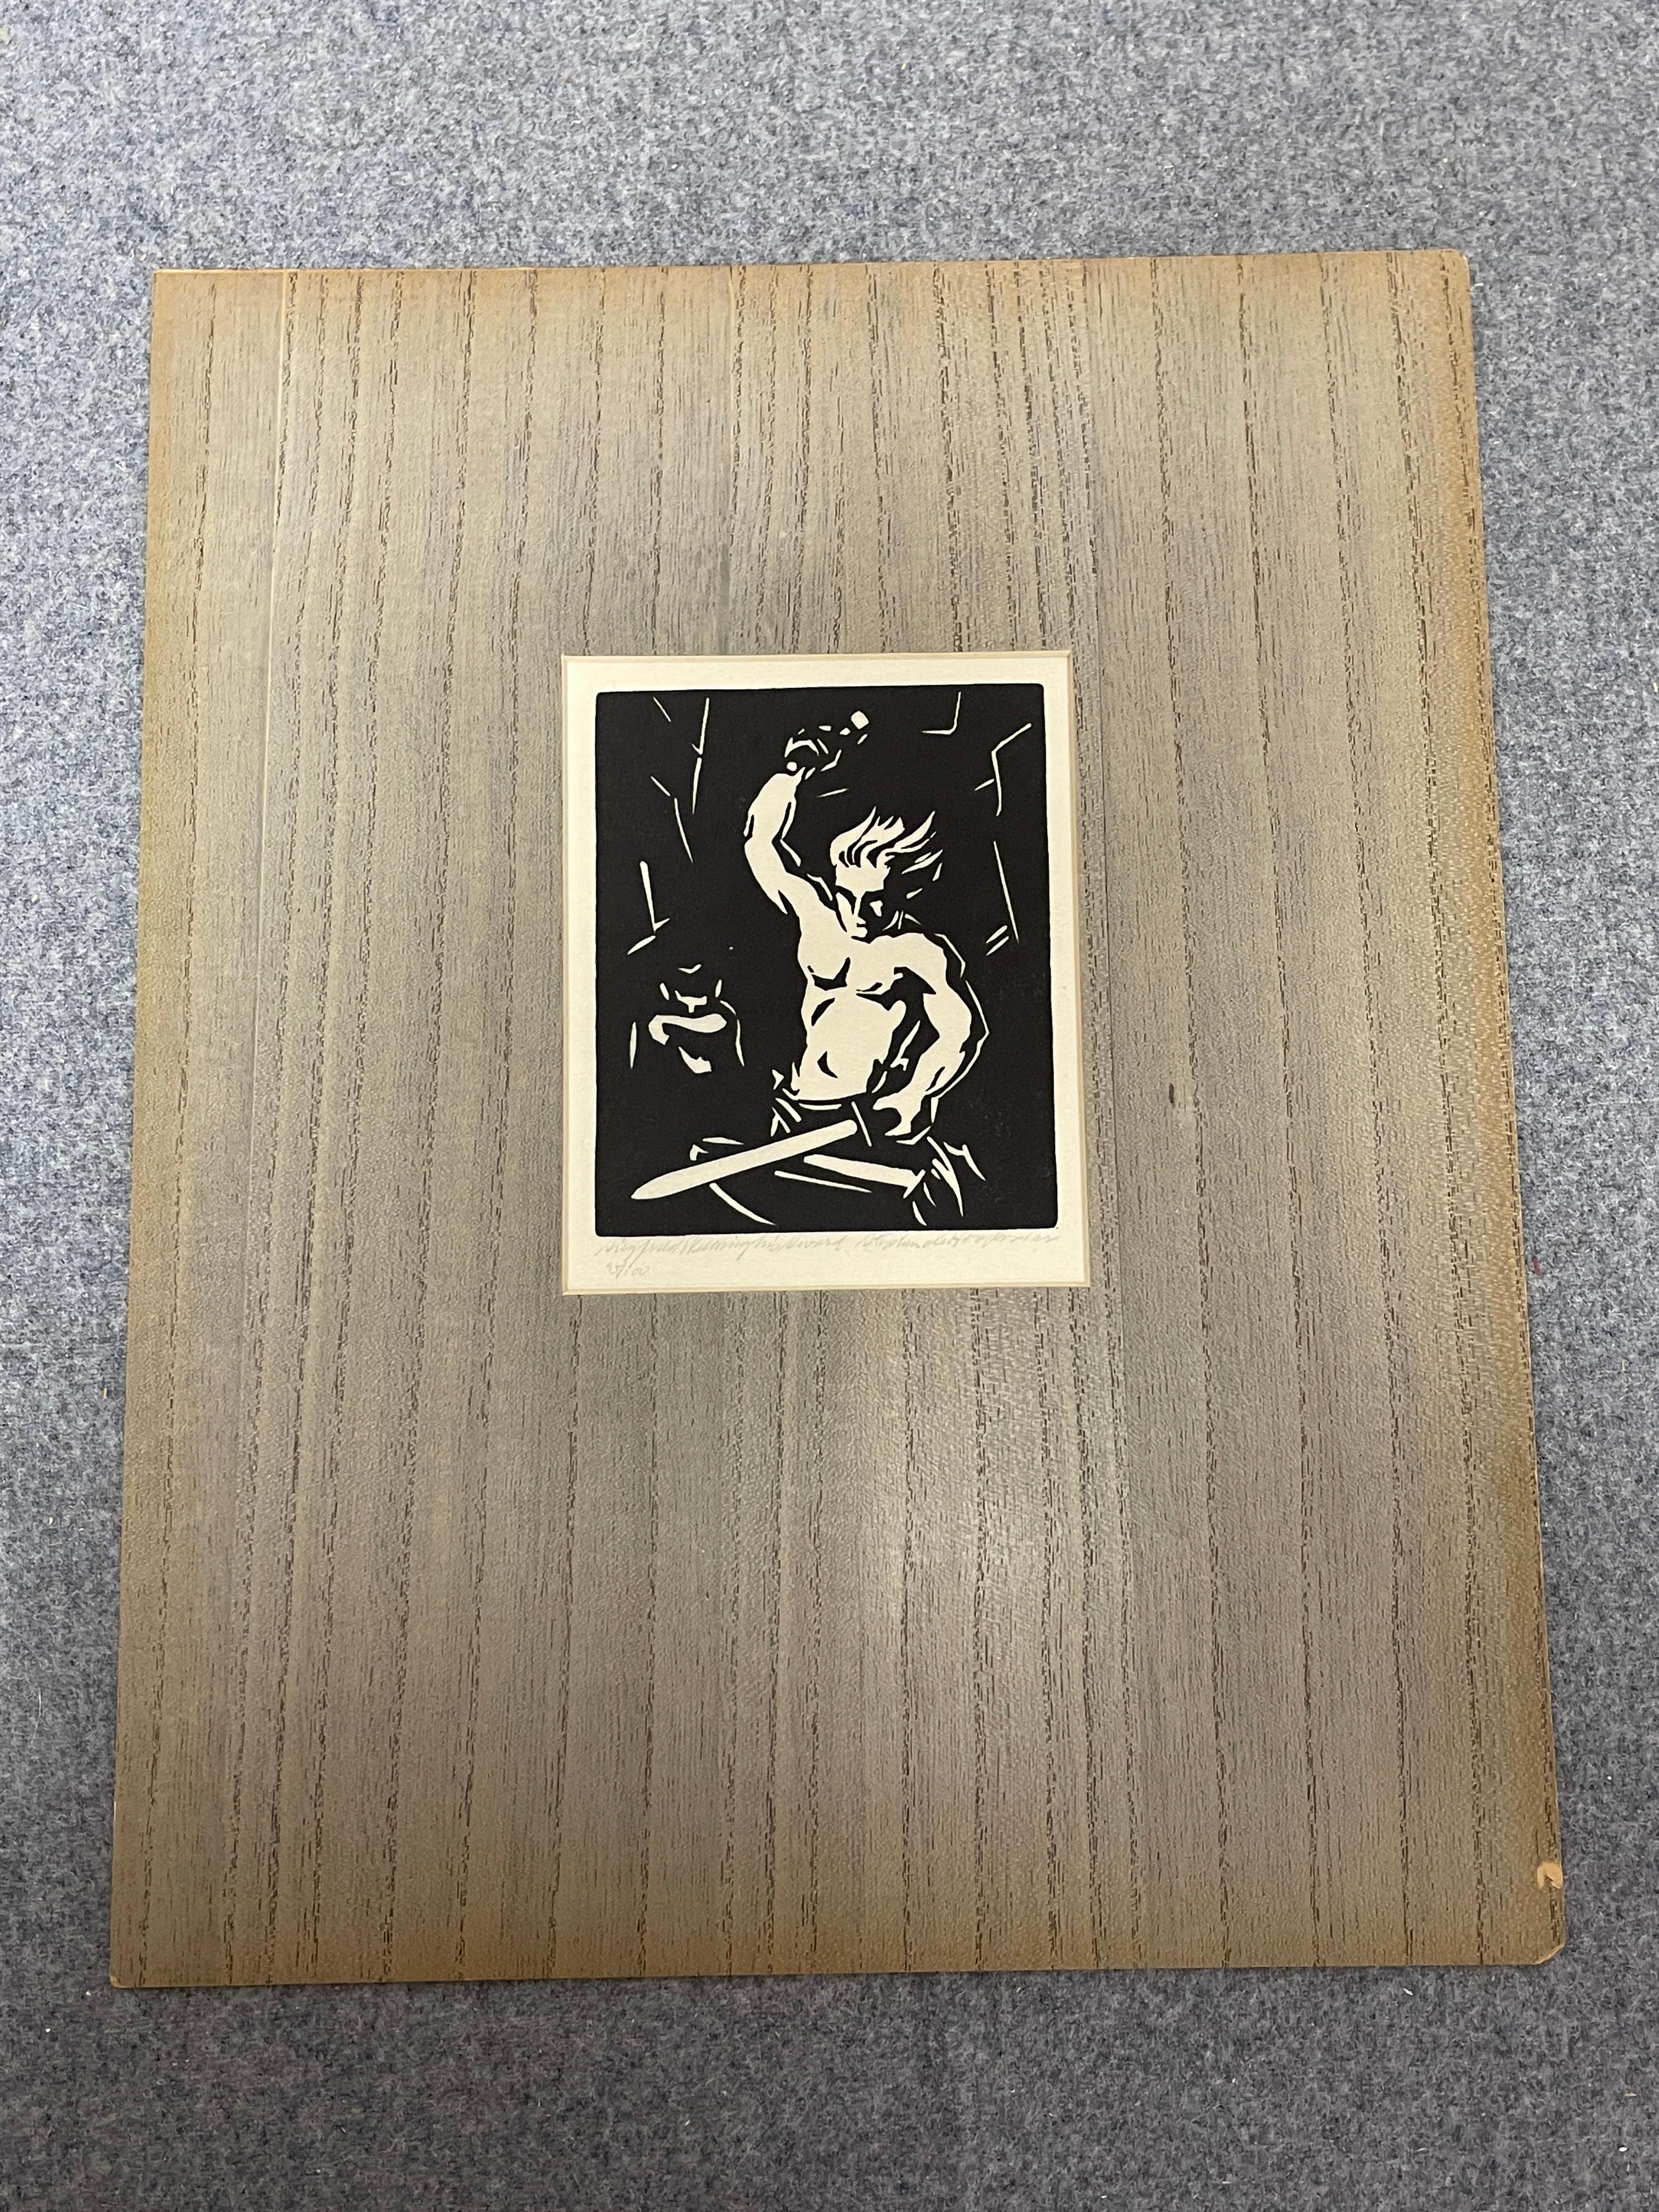 Stephen de Hospodar (1902-1958) 1930'S WPA Era Woodblock Print "Siegfried welding his Sword" 95/100